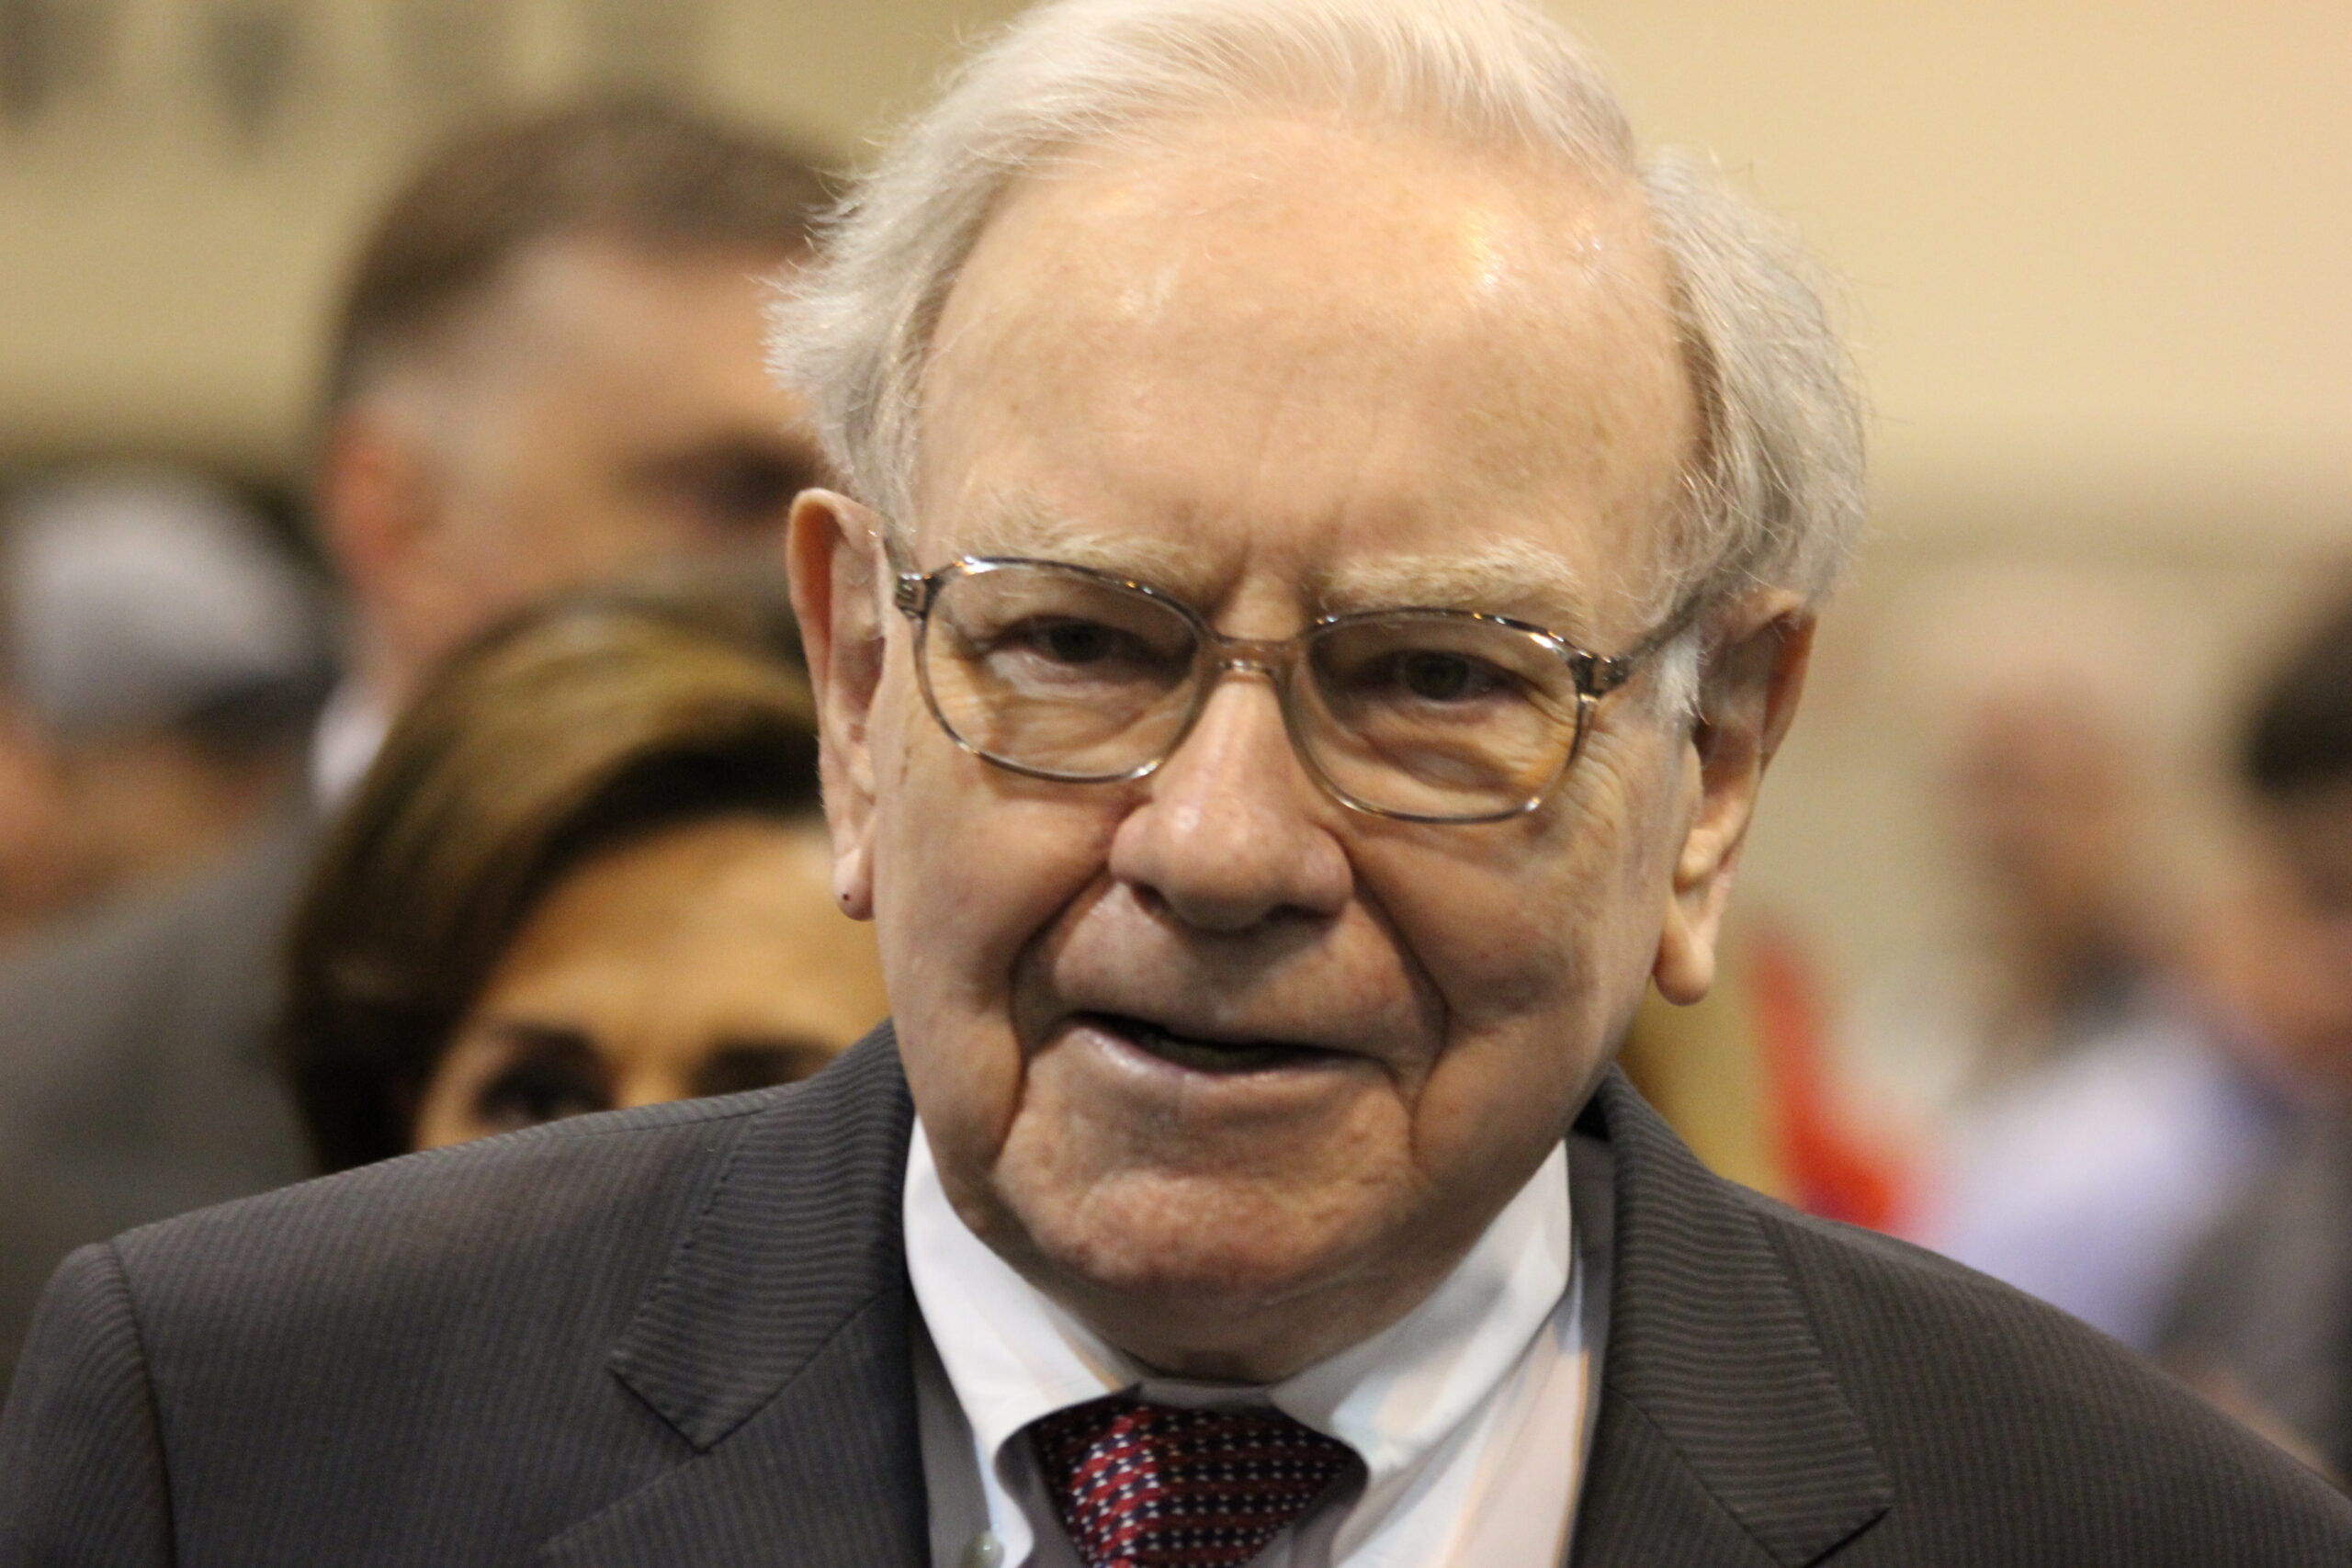 Warren Buffett Just Sold $21 Billion in Apple Stock. Here's Why. - The Motley Fool